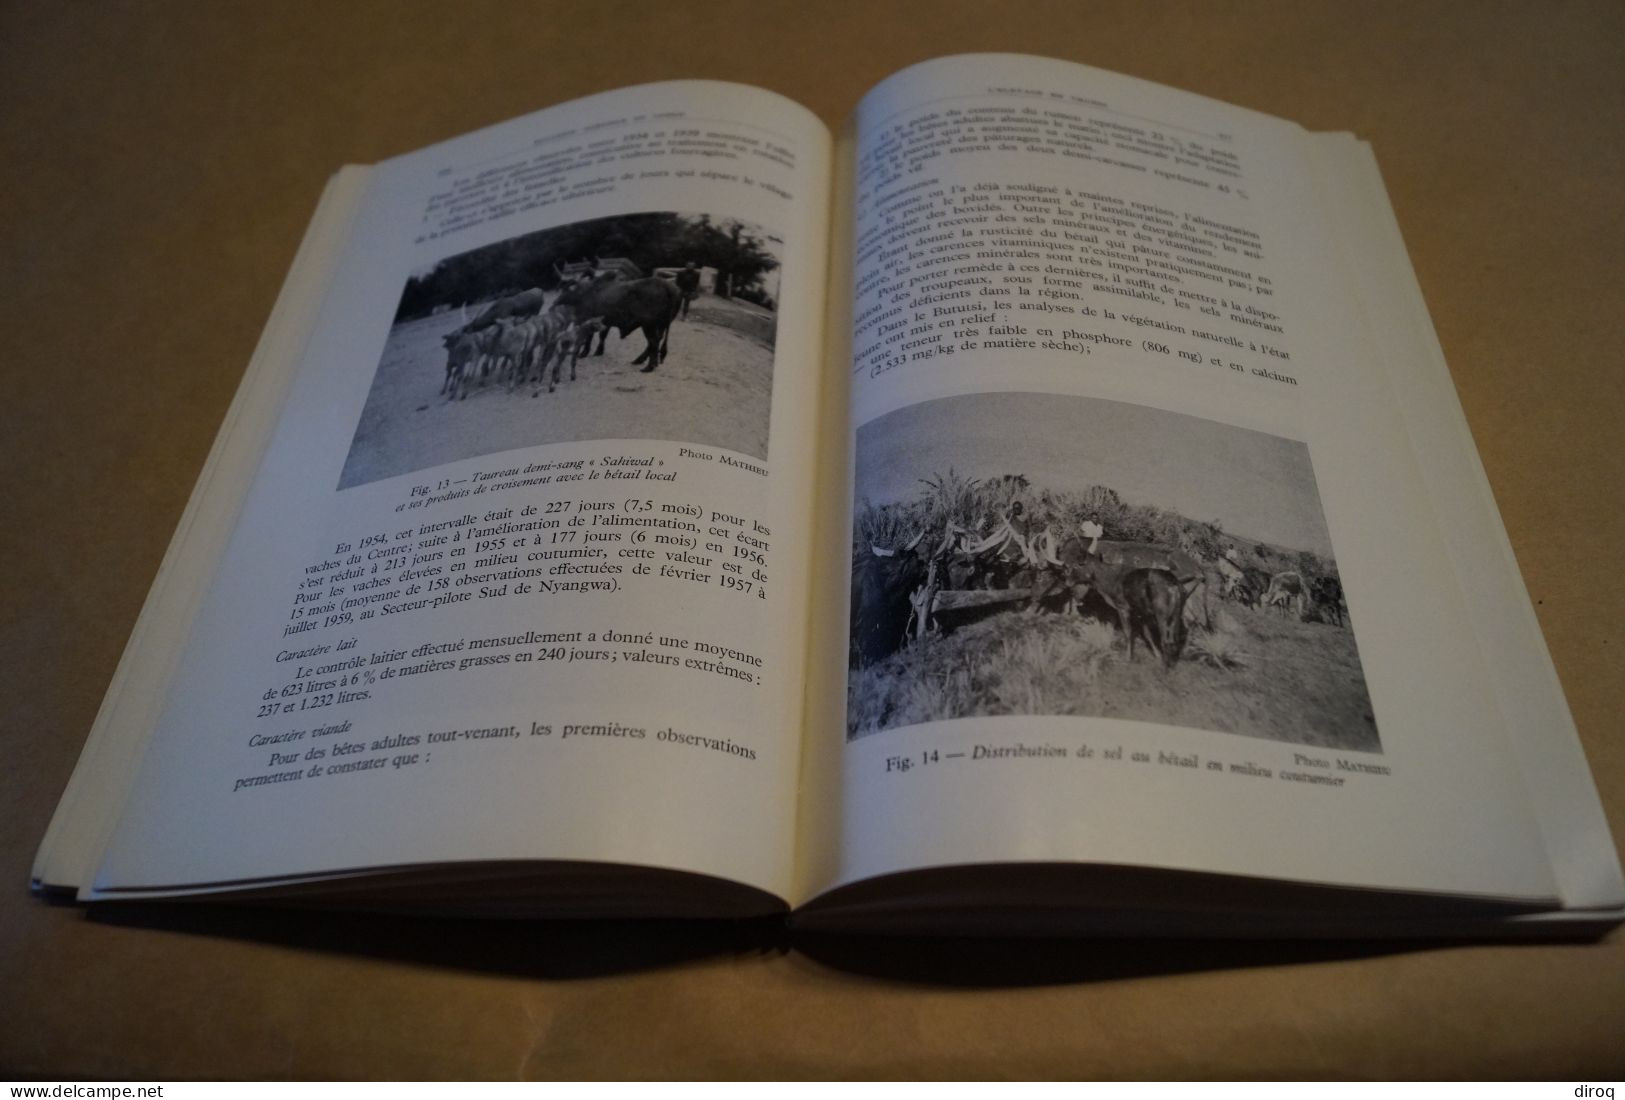 Congo Belge Et Ruanda-Urundi,268 Pages,Bulletin Agricole,24 Cm. Sur 16 Cm.1960 - Andere & Zonder Classificatie